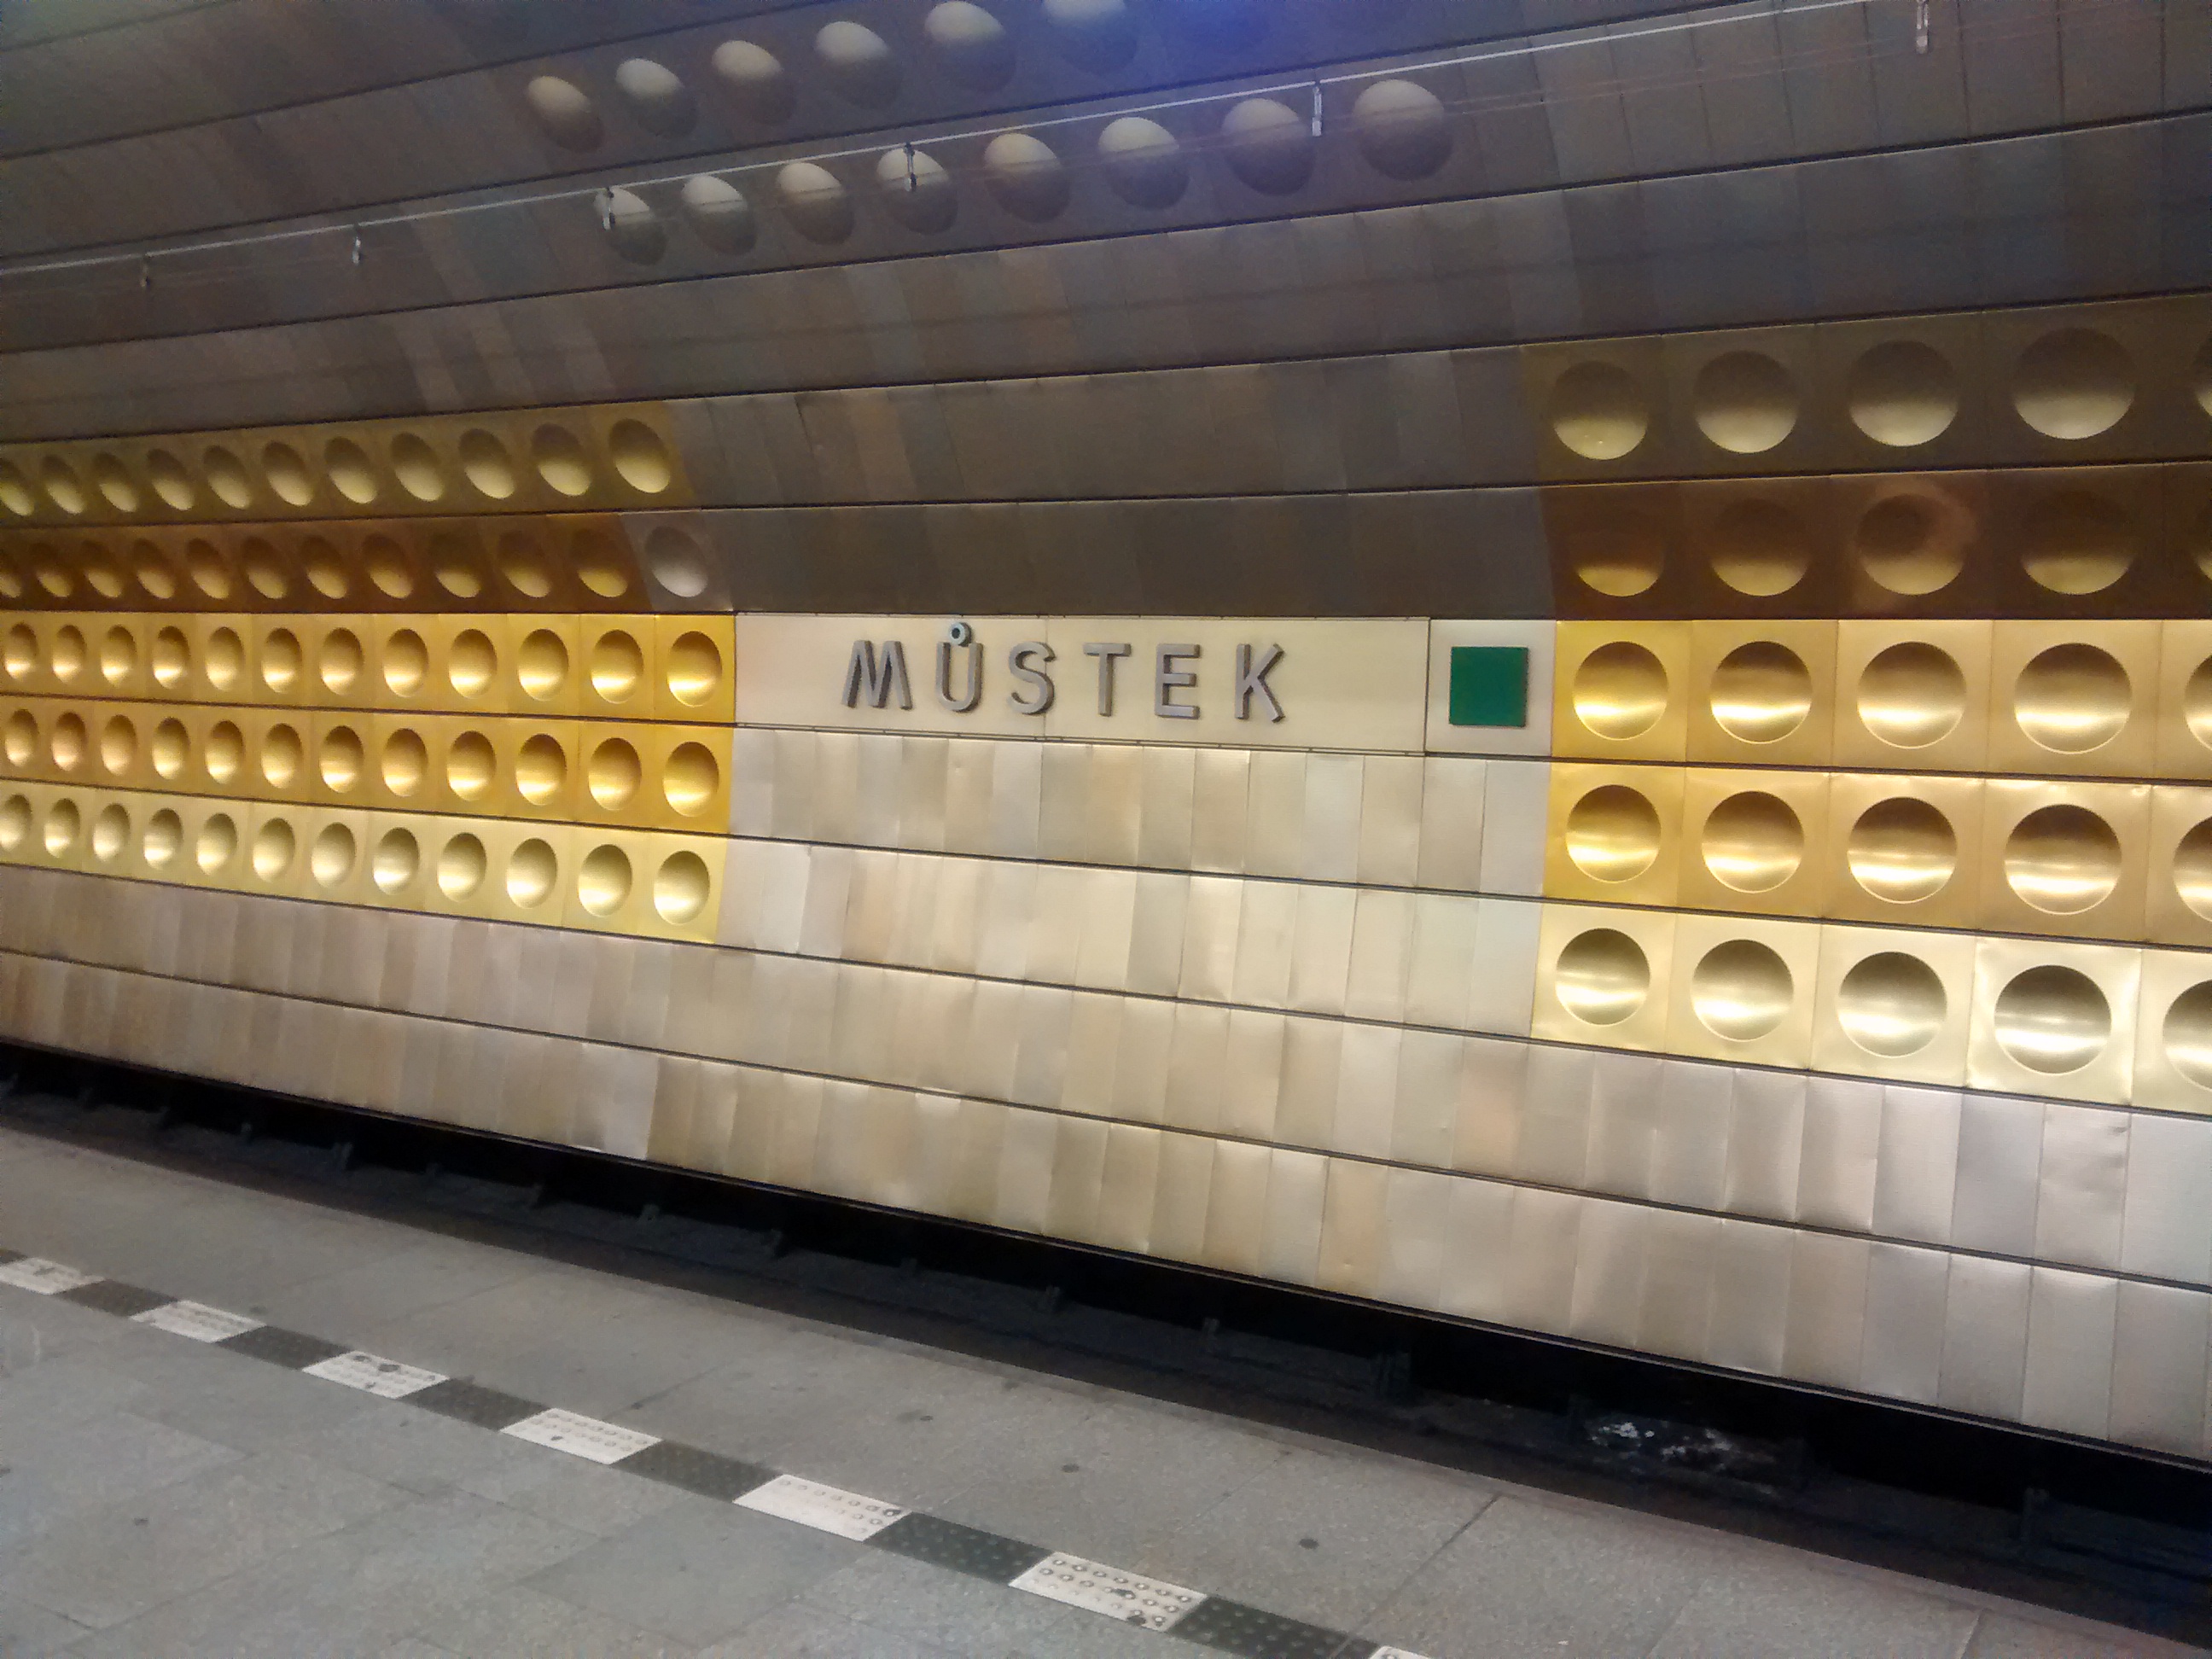 The MUSTEK stop in the Prague underground transit system. Very Soviet-era design.